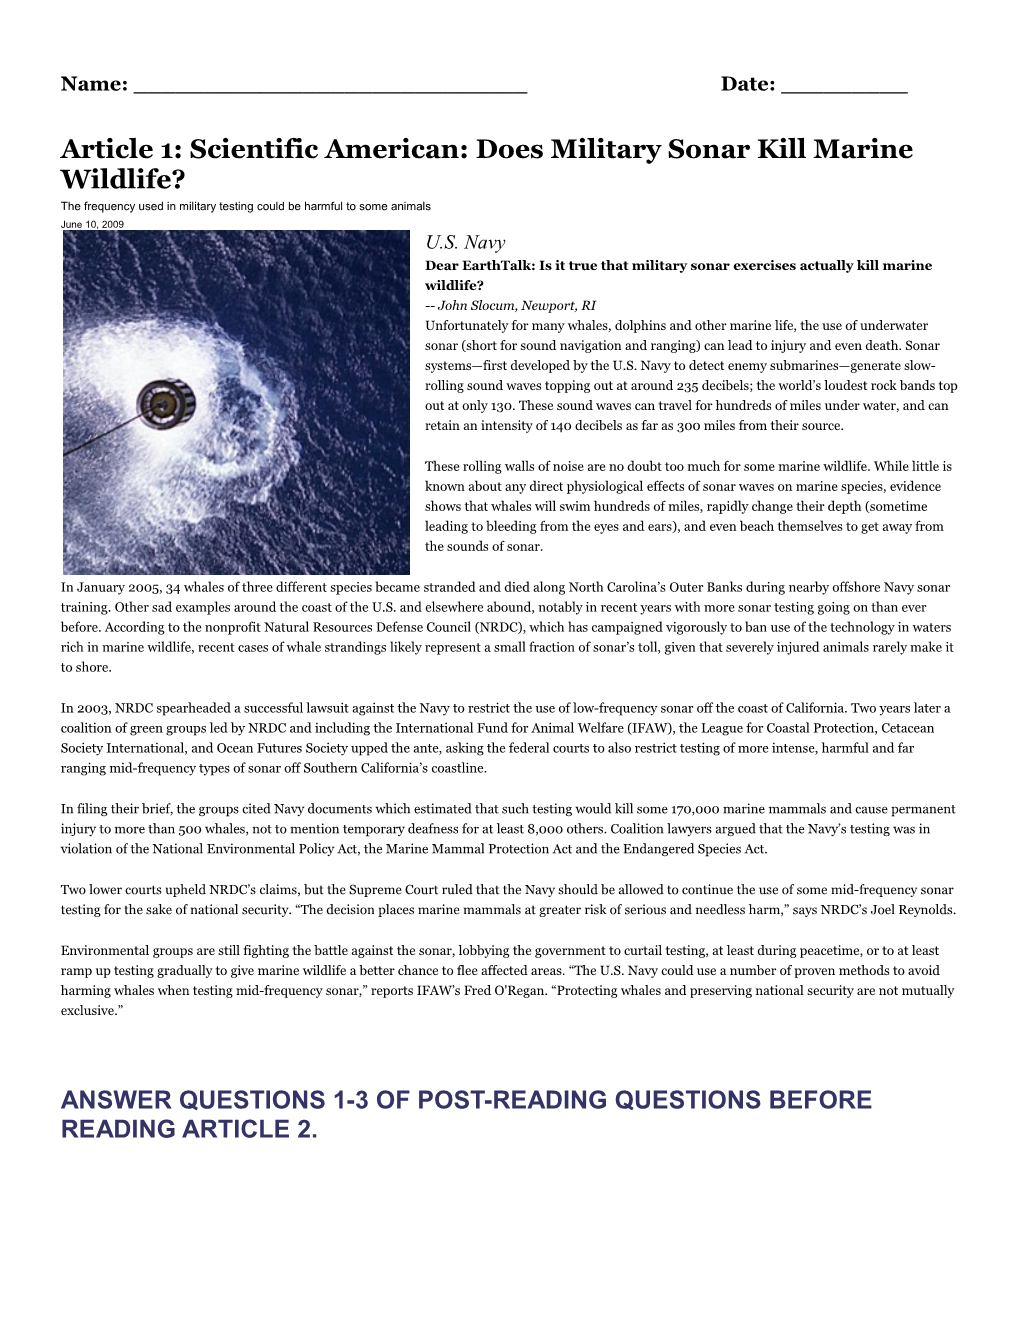 Article 1: Scientific American: Does Military Sonar Kill Marine Wildlife?